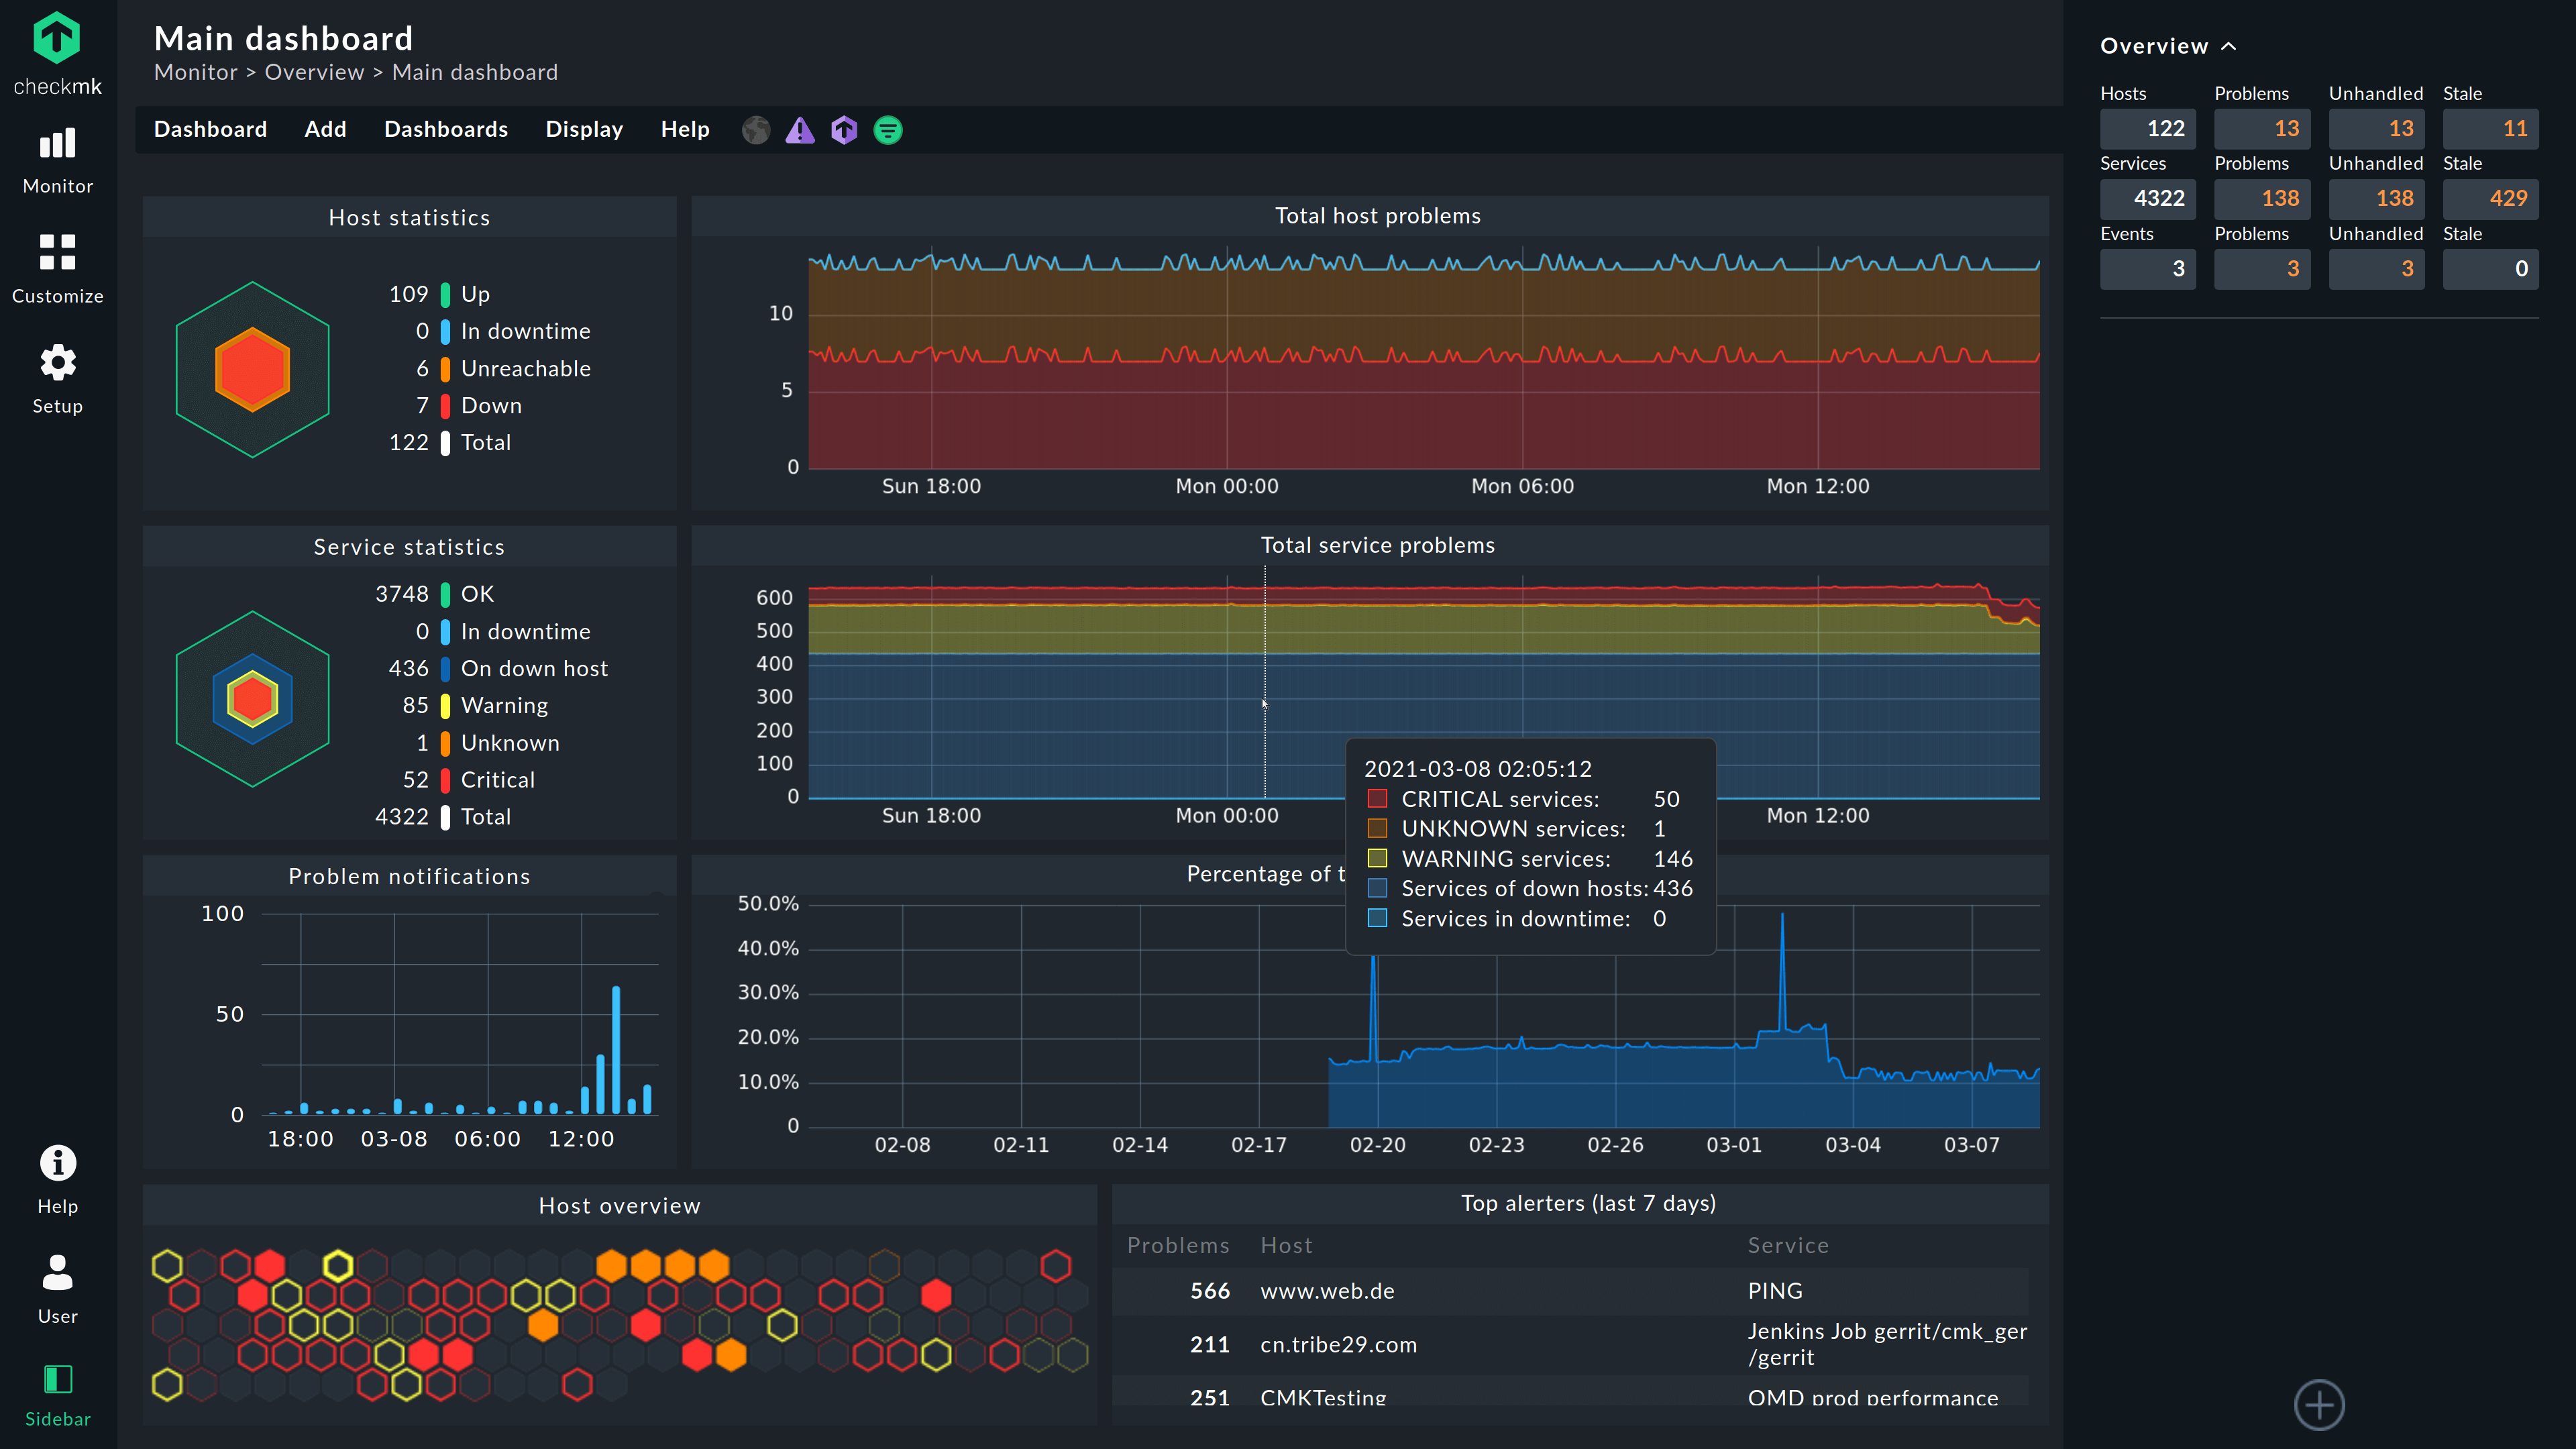 Monitoring dashboard in Checkmk